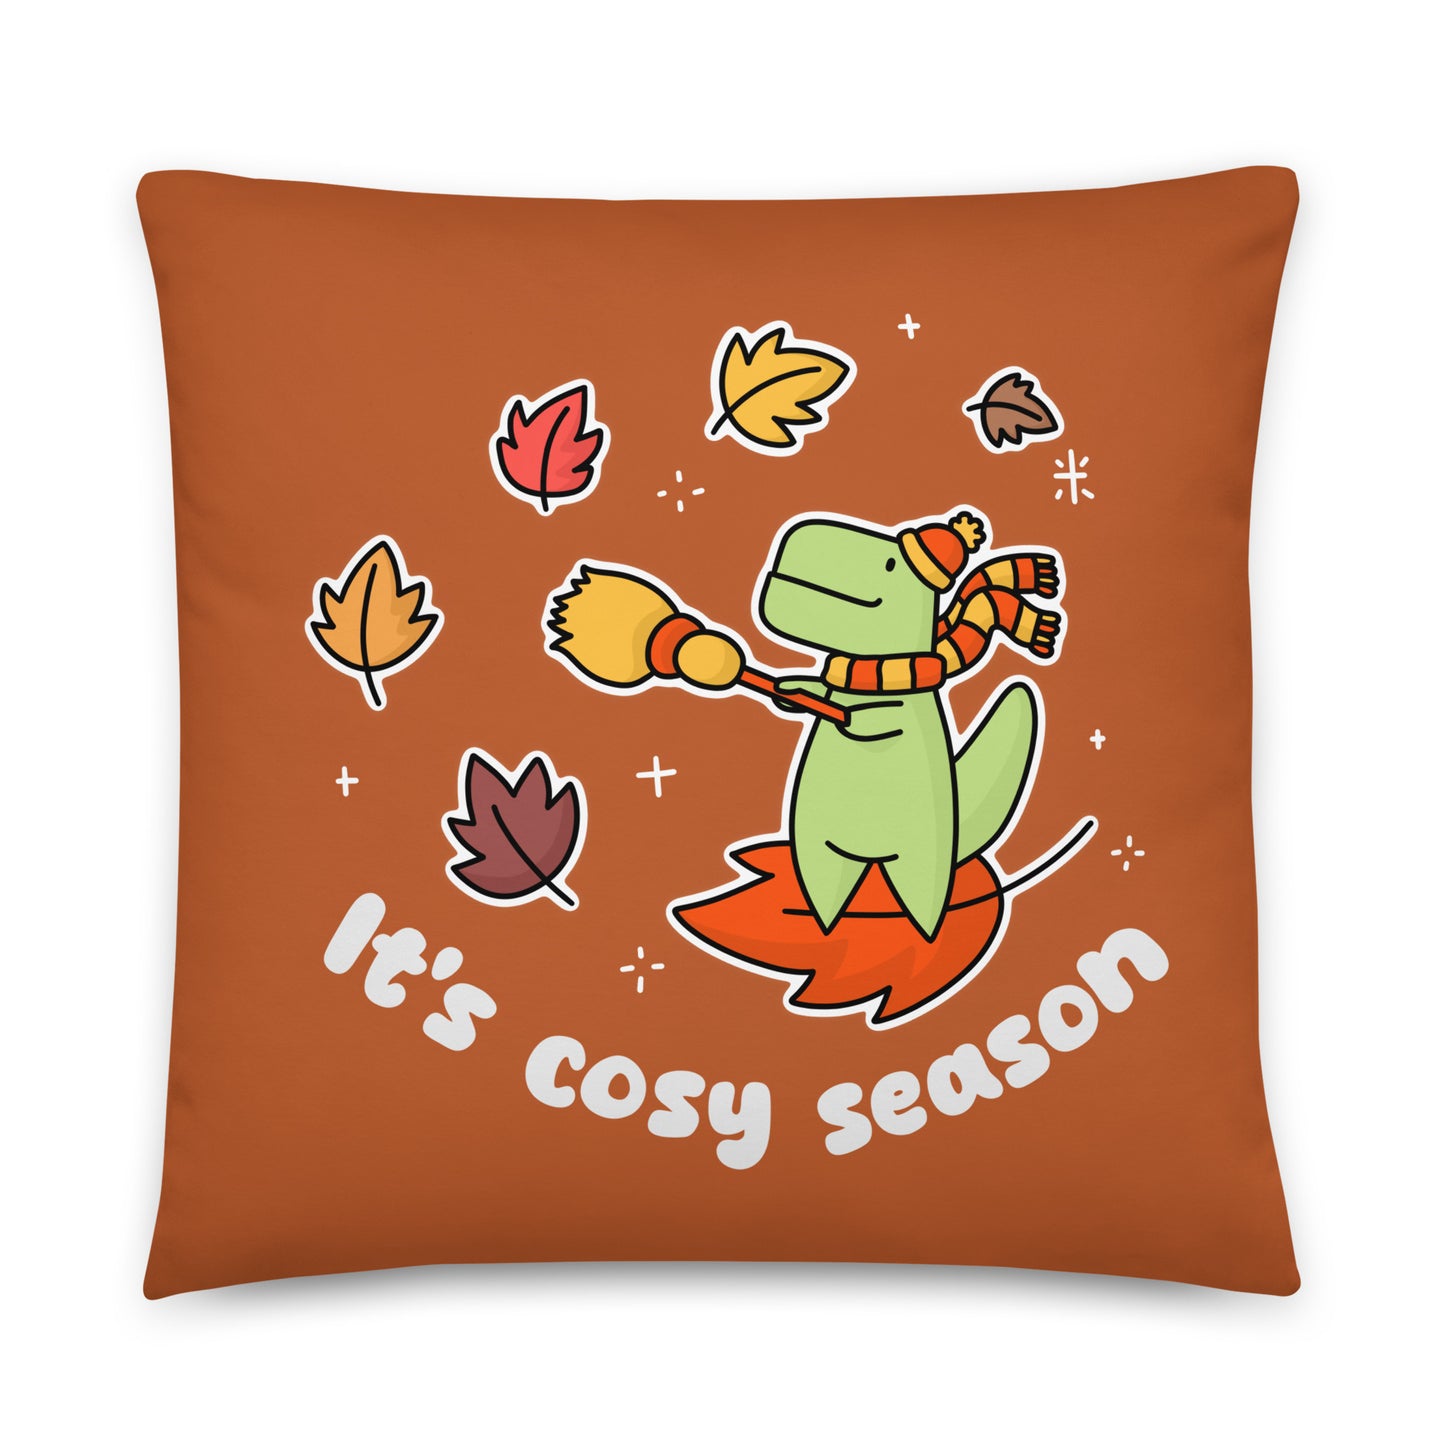 It's Cosy Season Pillow